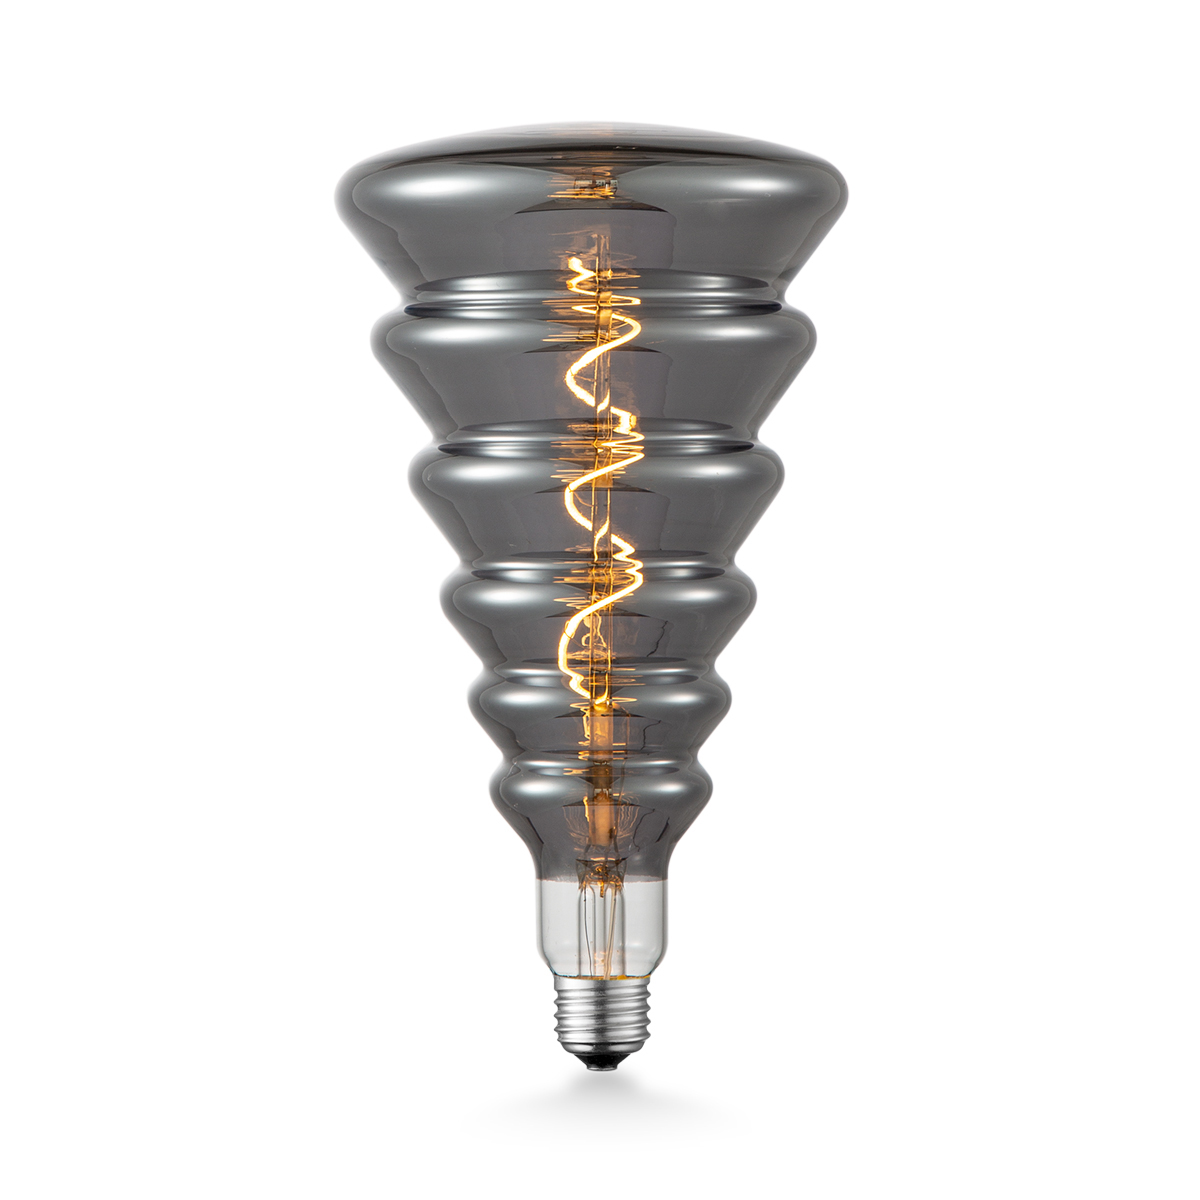 Tangla lighting - TLB-8097-06TM - LED Light Bulb Double Spiral filament - special 4W titanium - medium - tower - dimmable - E27